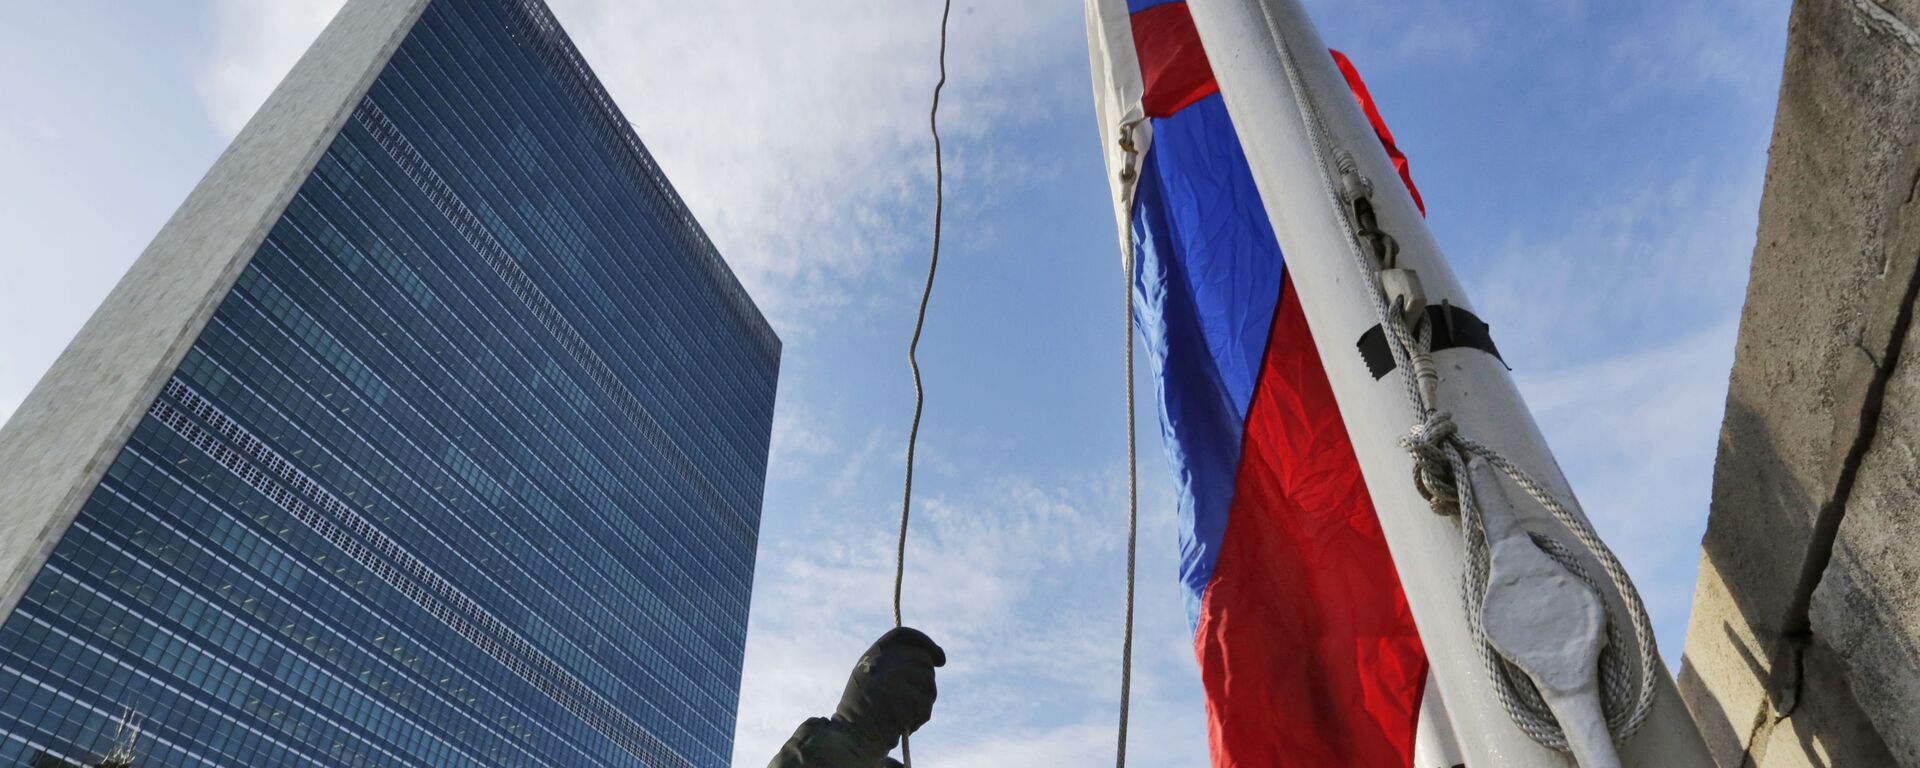 A United Nations security officer raises the Russian flag outside U.N. headquarters, Tuesday morning, Feb. 21, 2017. - Sputnik International, 1920, 06.10.2020